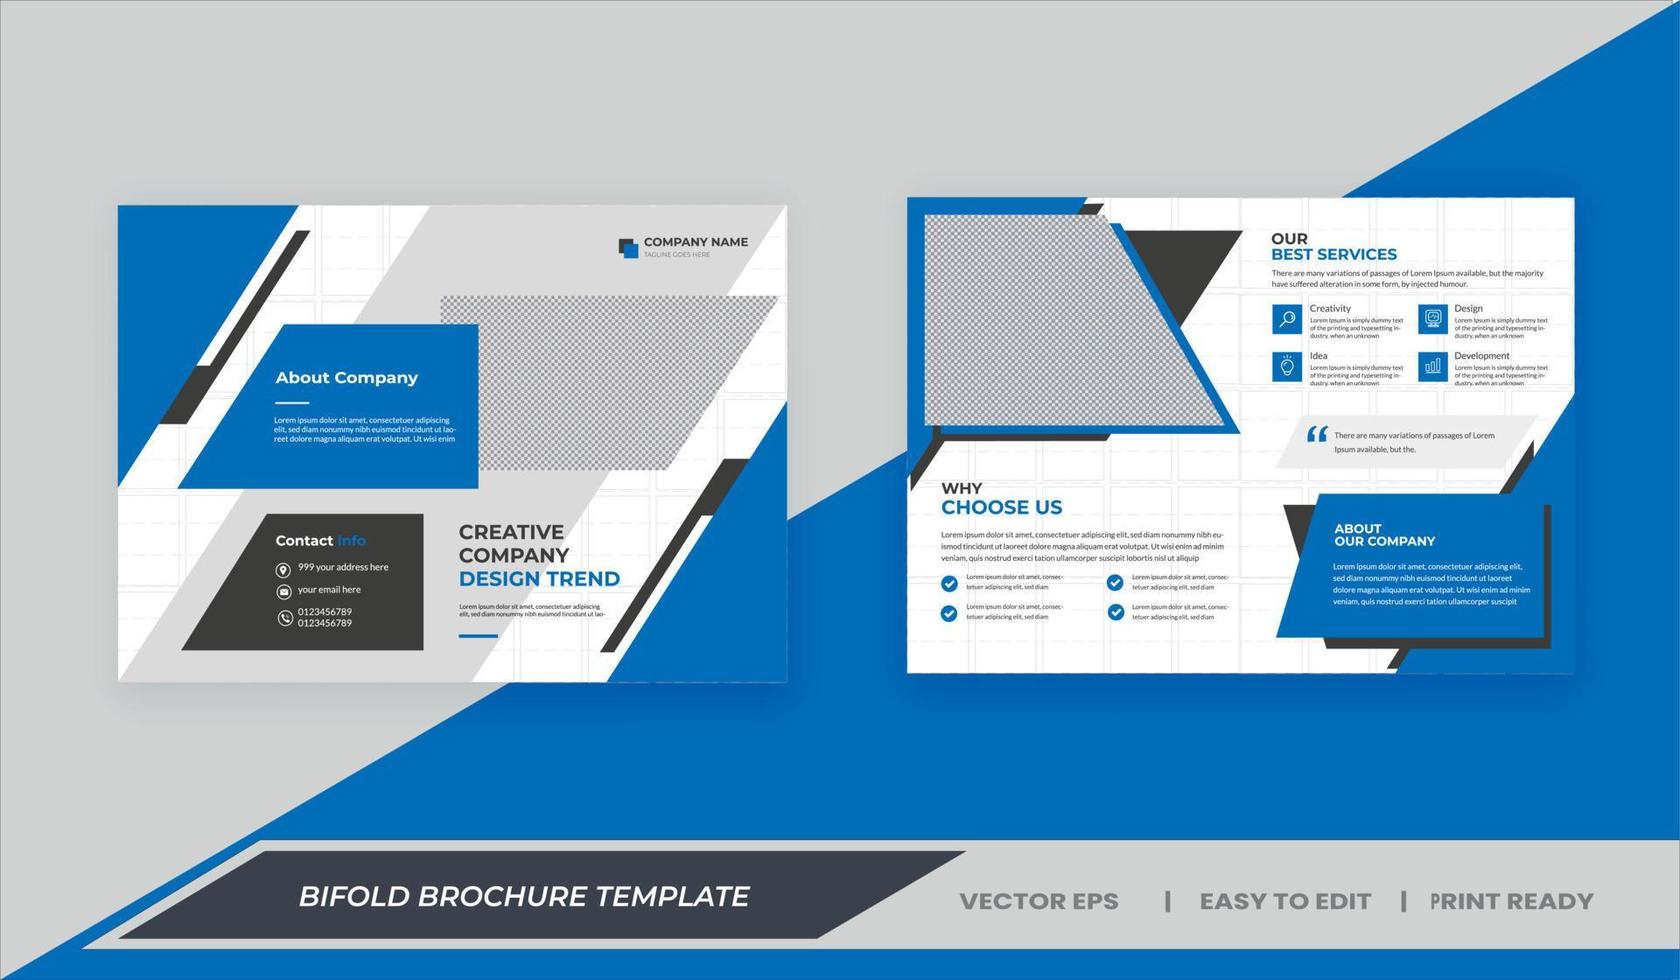 Bifold Brochure Template - Professional business brochure, bi fold template,cover page, half fold brochures - corporate brochure  - 07 vector